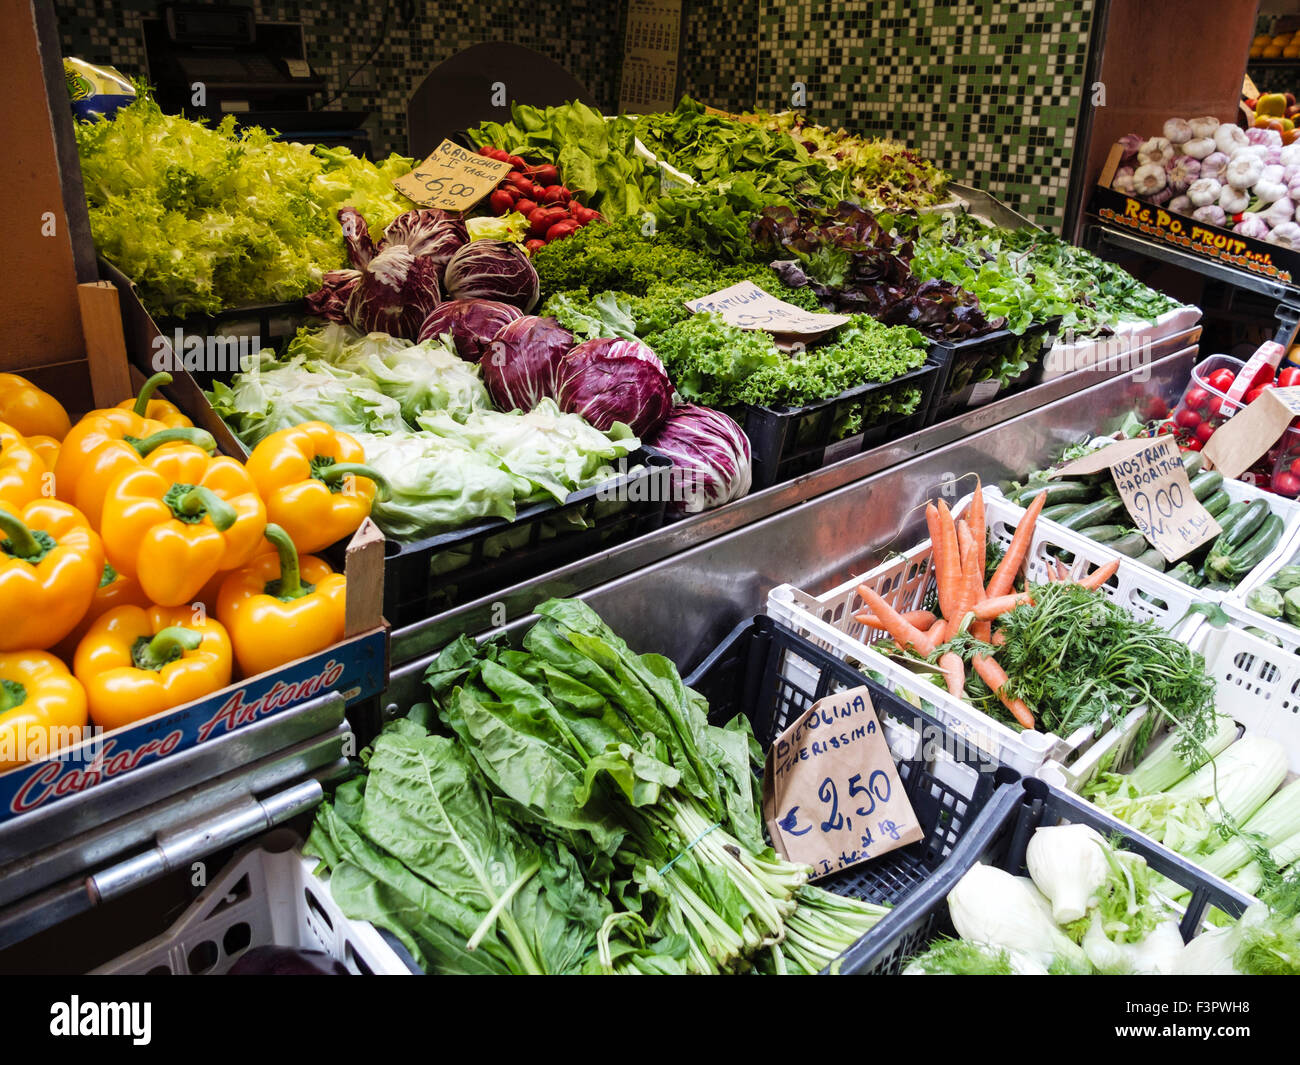 Italy, Emilia-Romagna region, Bologna - market food sellers. Fruit and vegetable market. Salad crops. Stock Photo